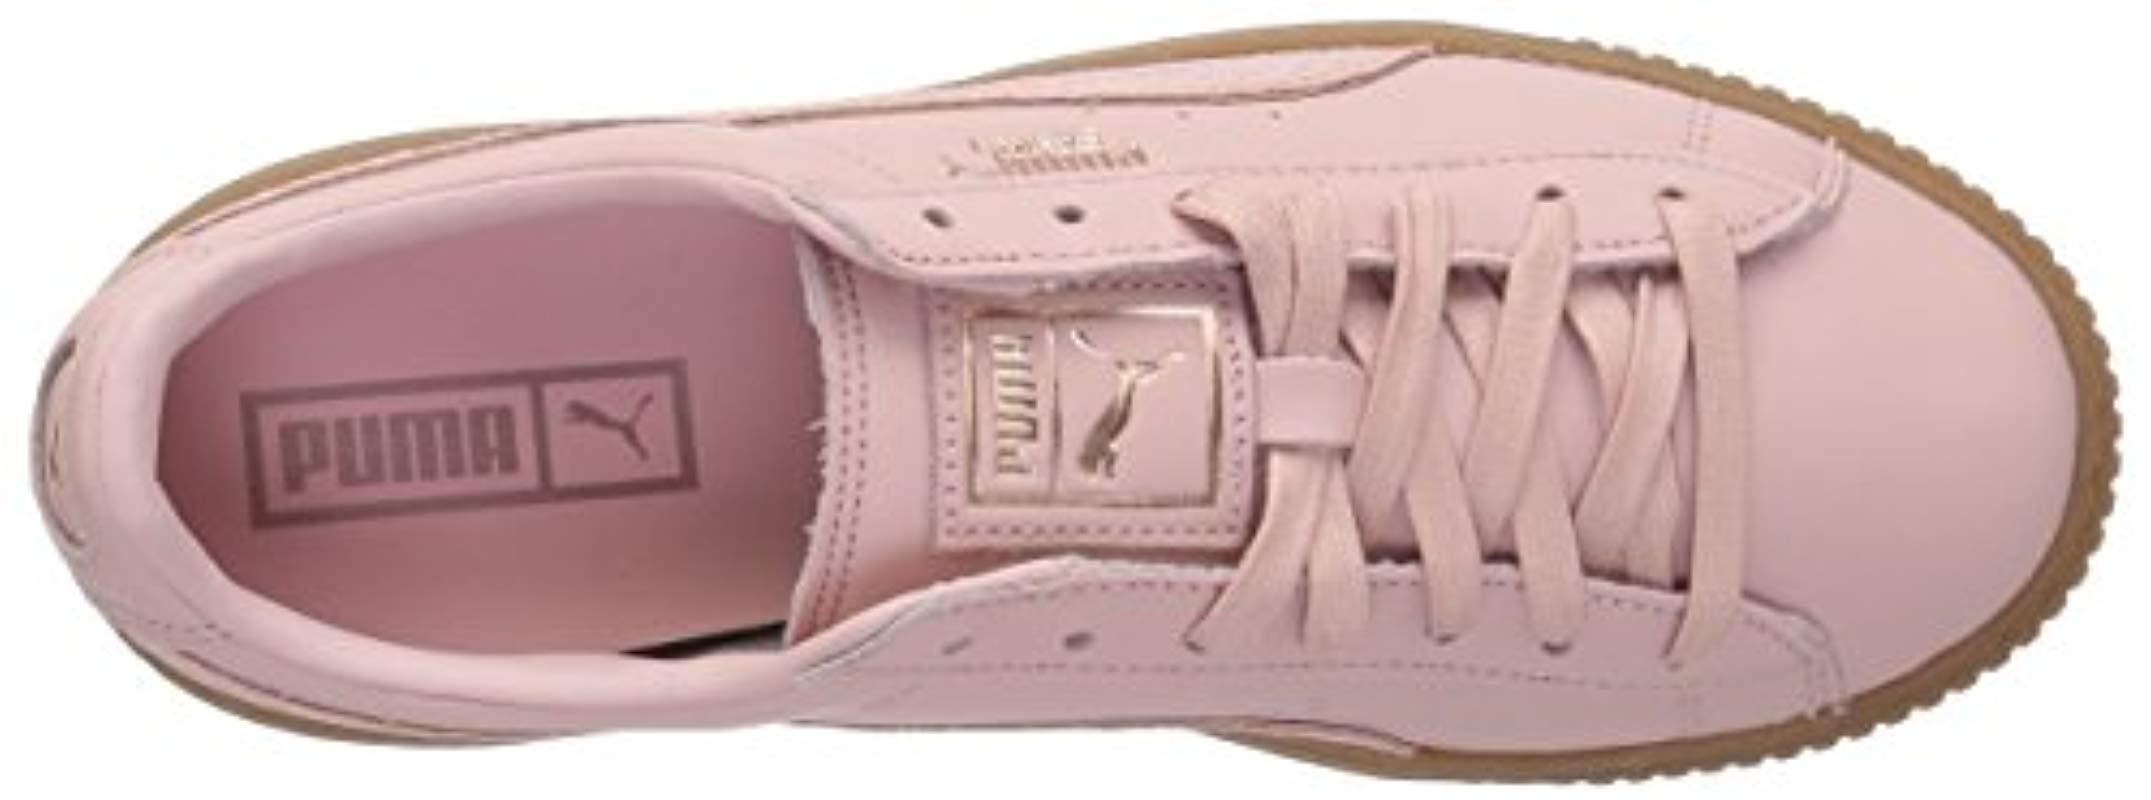 puma women's basket platform euphoria gum sneaker